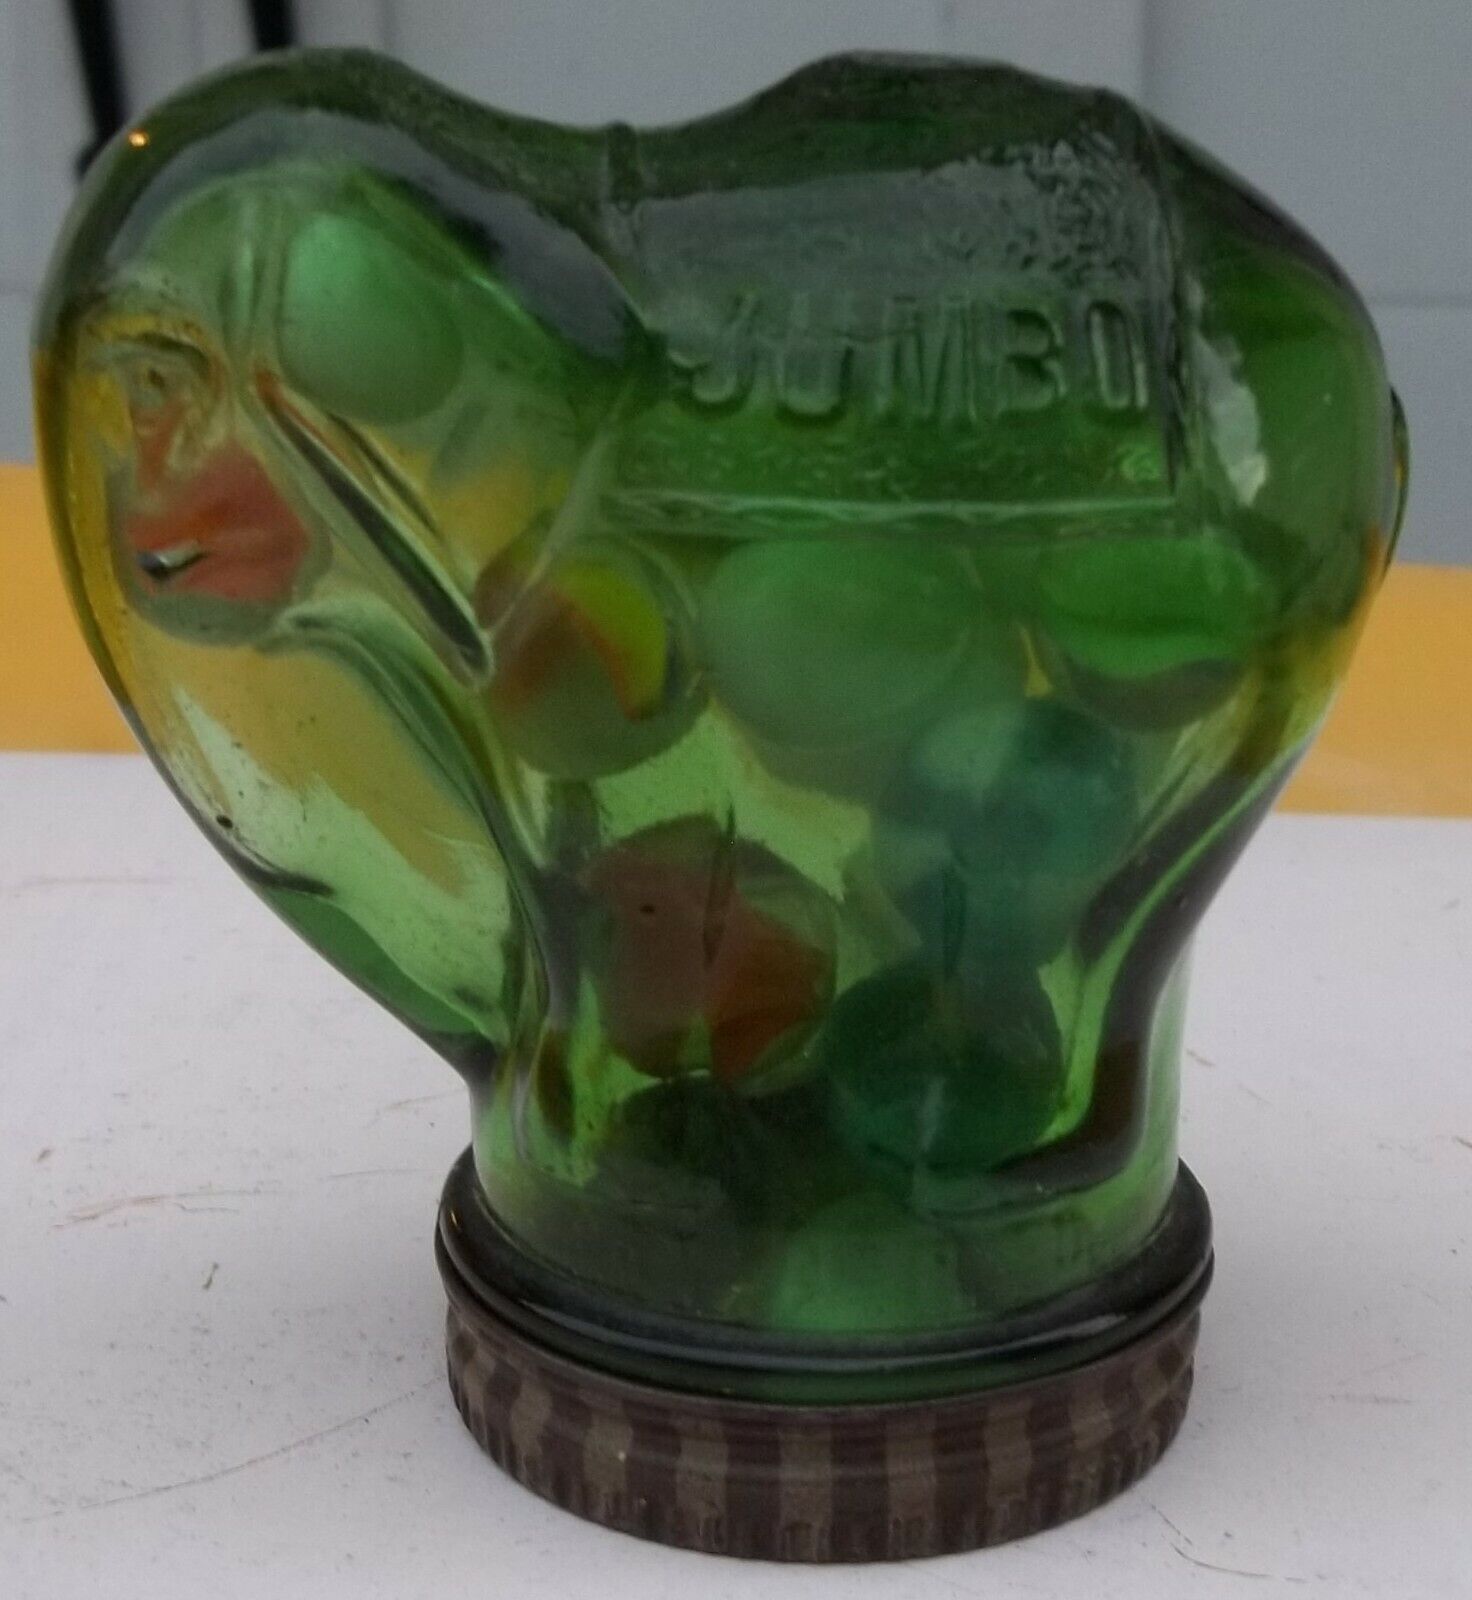 VTG Jar JUMBO PEANUT BUTTER Elephant Rare with Original Top Green Glass Spice FS